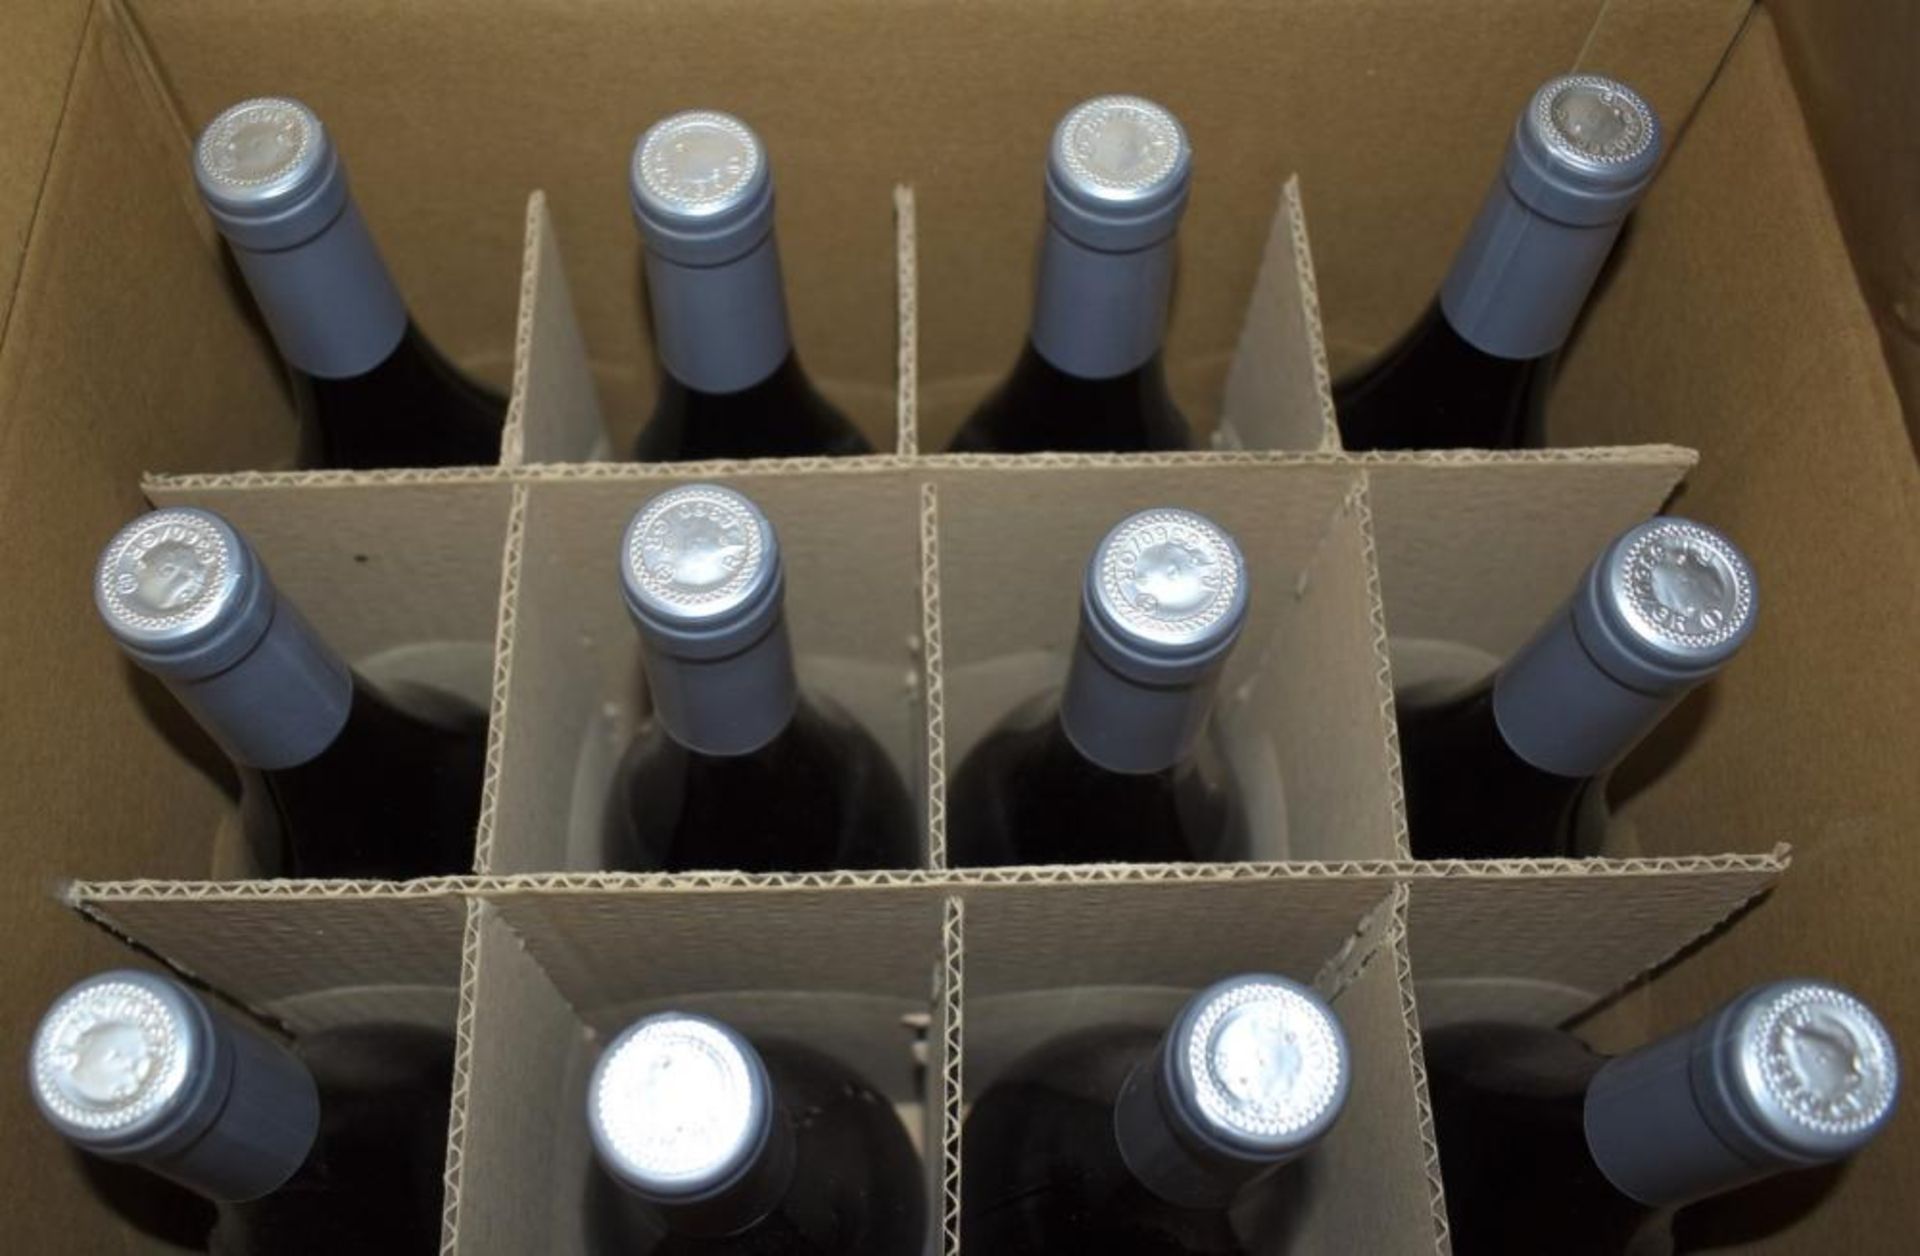 12 x Bottles of Stefano Di Blasi 2019 Vermentino Toscana 13.5% Wine - 750ml Bottles - Drink Until 20 - Image 5 of 6